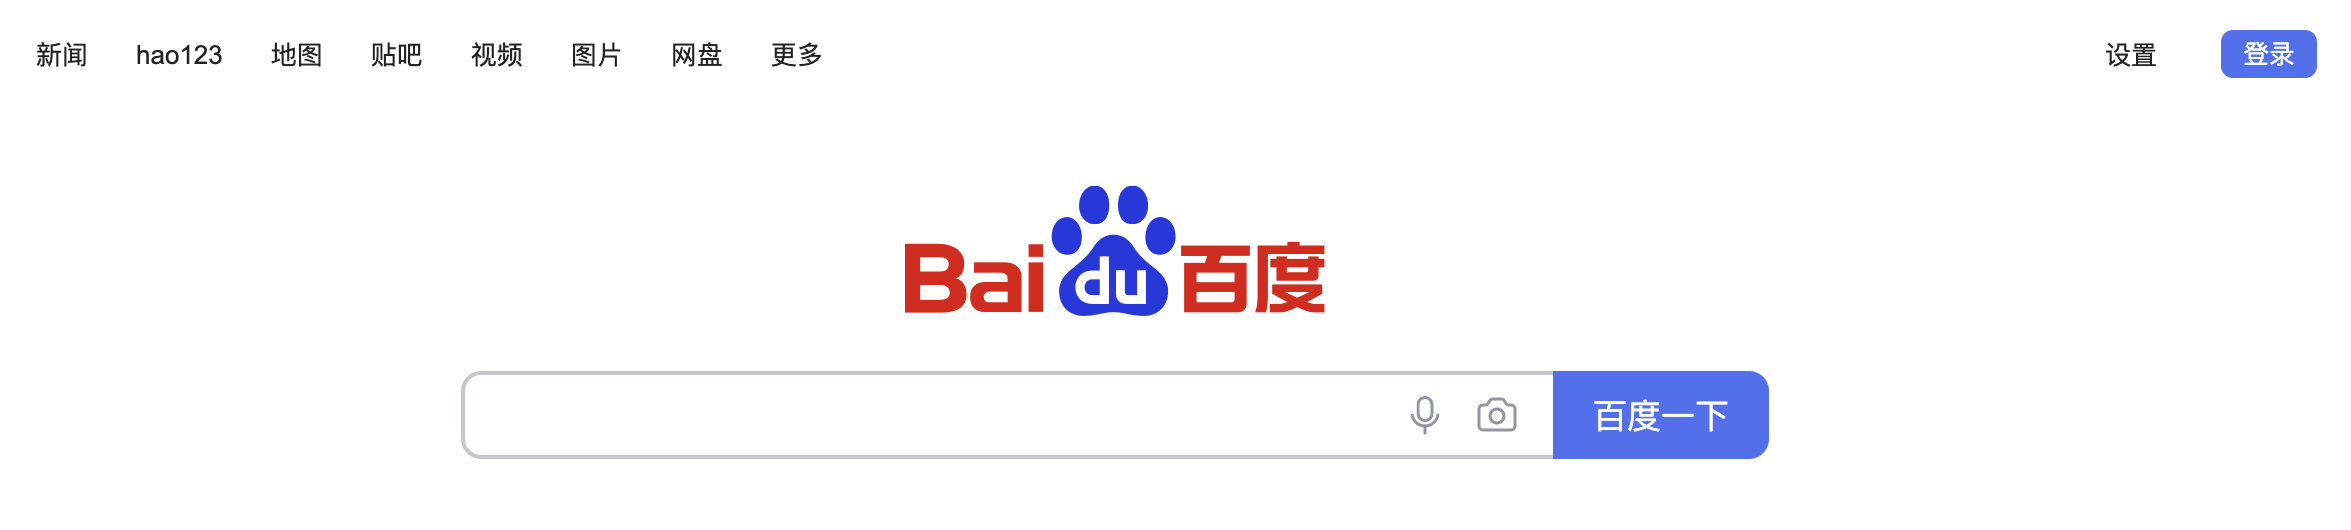 Baidu Portal